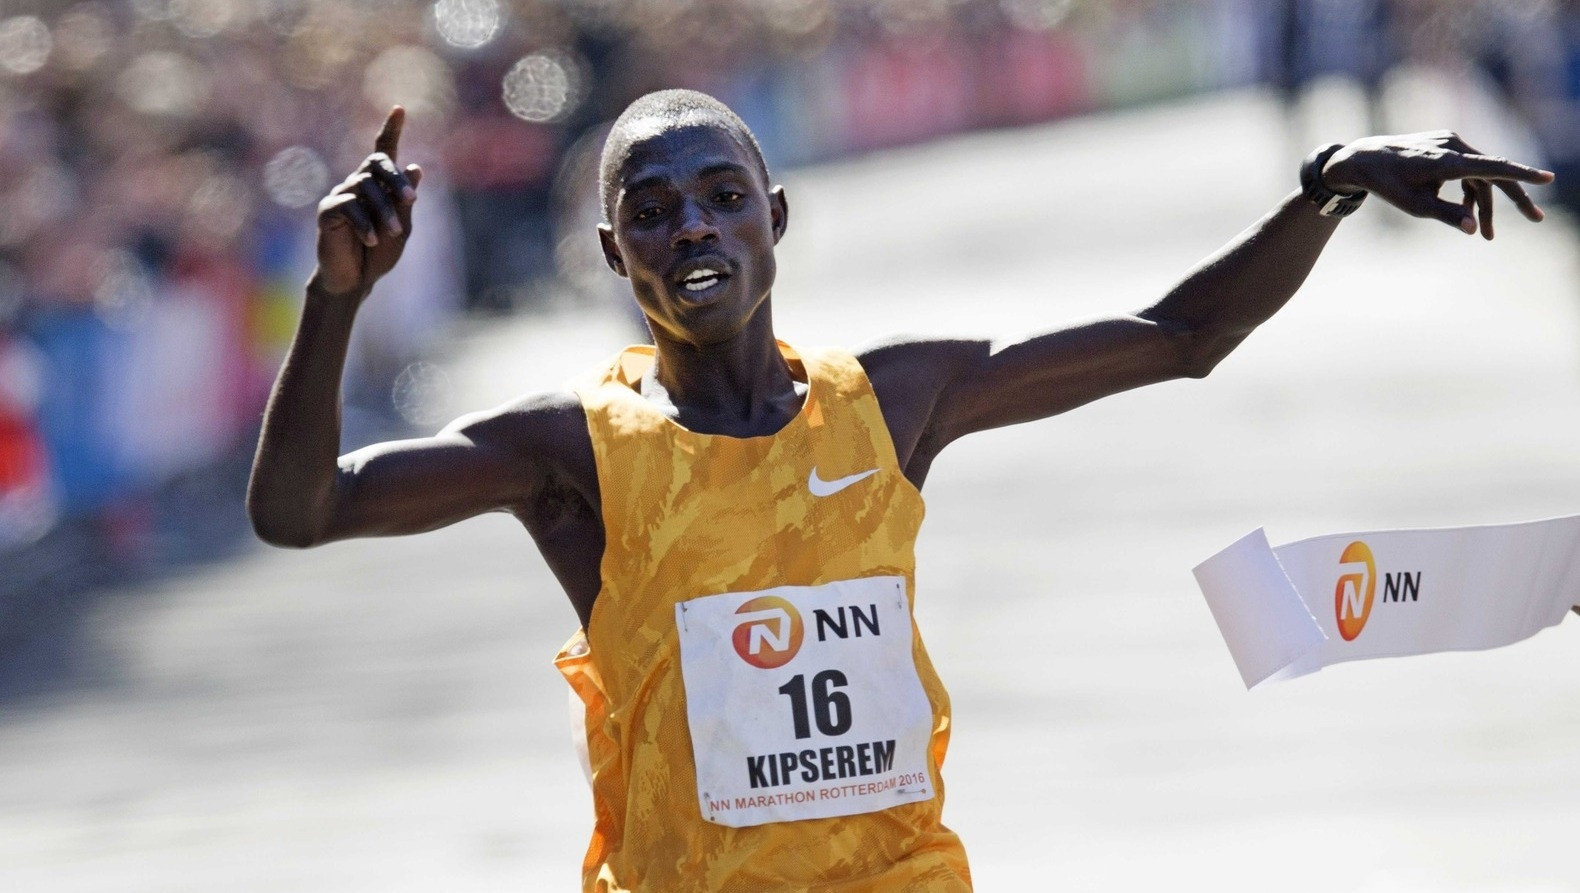 2018 Abu Dhabi Marathon champion Marius Kipserem from Kenya eyes podium at Rotterdam Marathon